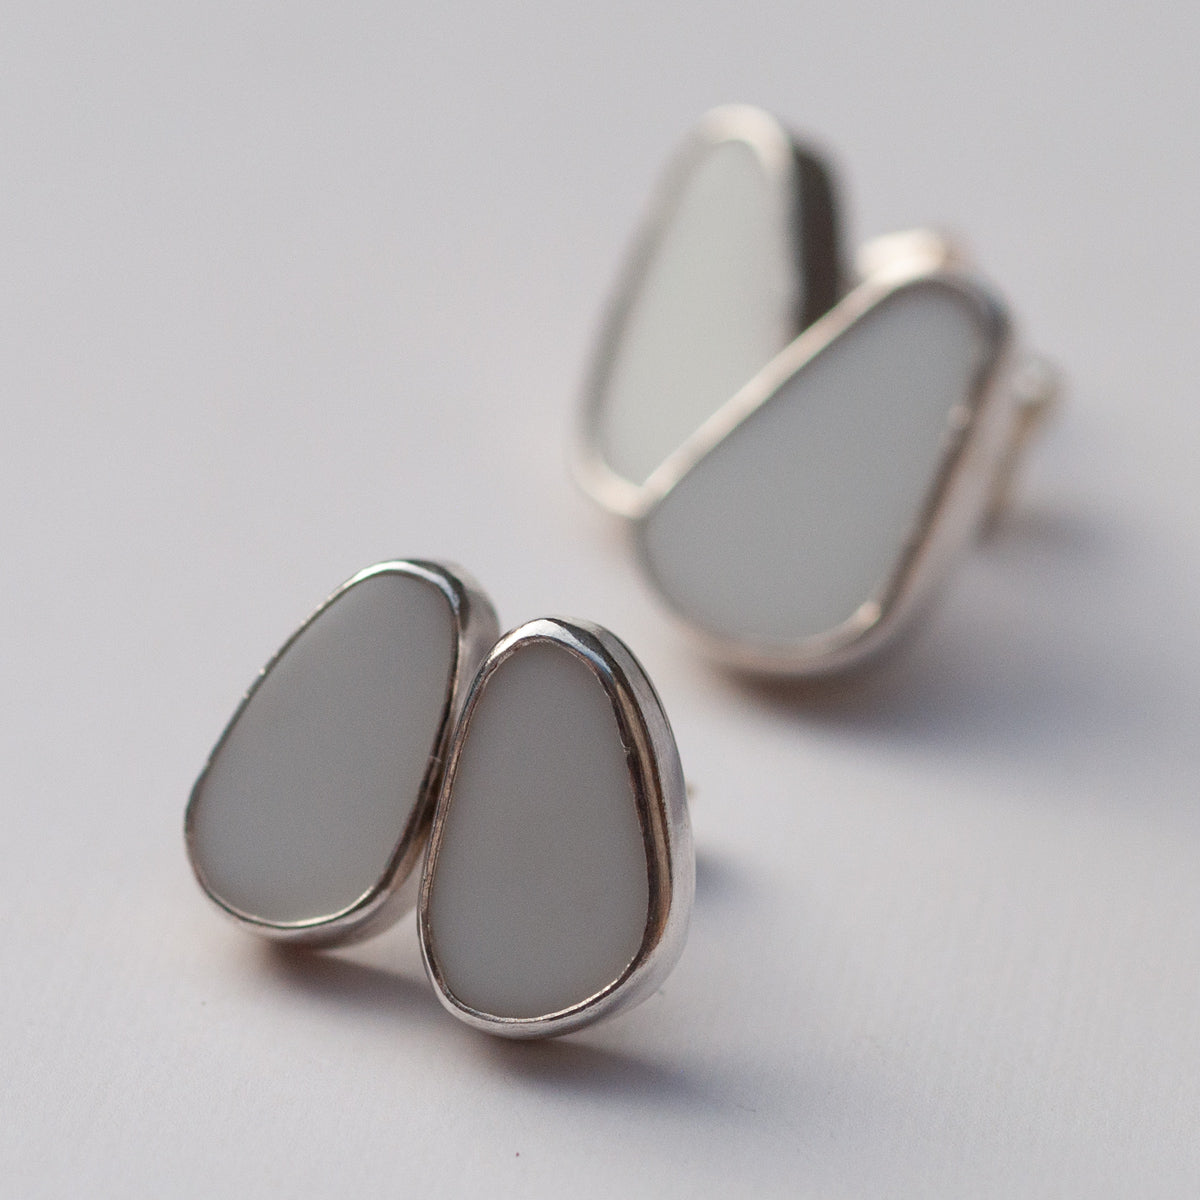 Tidal Collection - Milk Sea Glass Stud Earrings